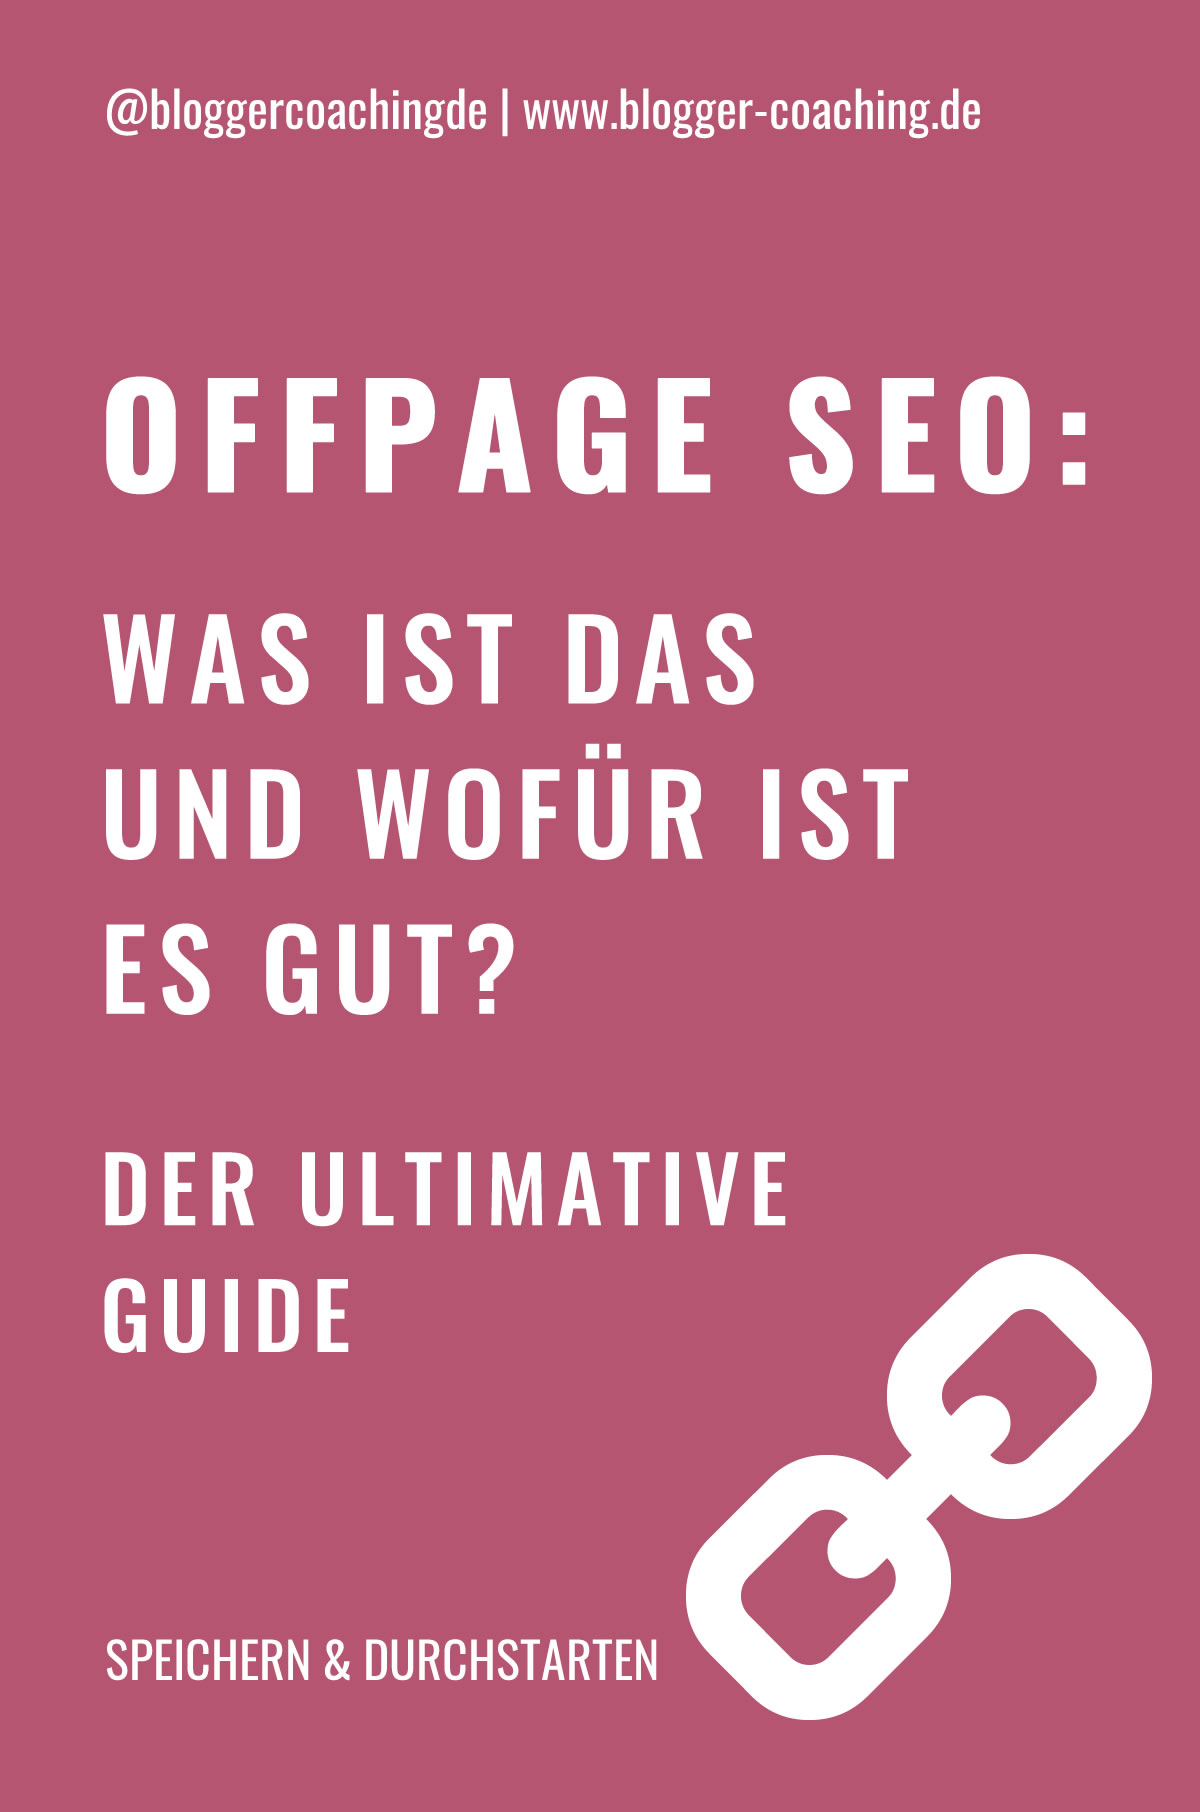 Off-Page SEO für Blogger - Der ultimative Guide | Blogger-Coaching.de - Tipps & Kurse für Blogger